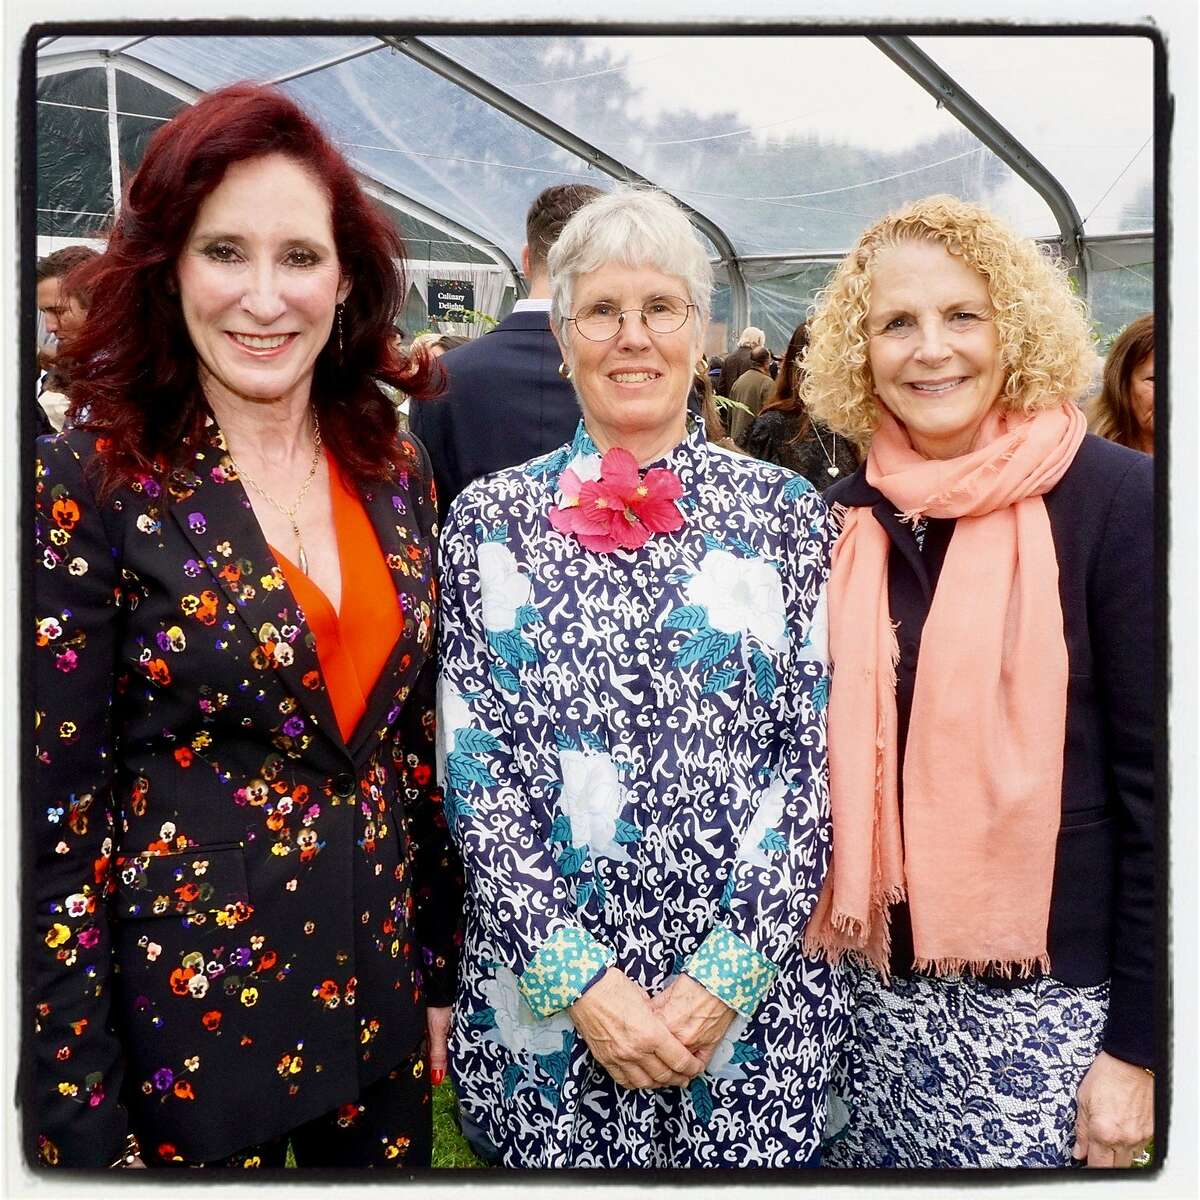 Garden Feast cochair Wendy Tonkin (left) with Botanical Garden Board chairman Delle Maxwell and cochair Sarah Earley. May 23, 2018.